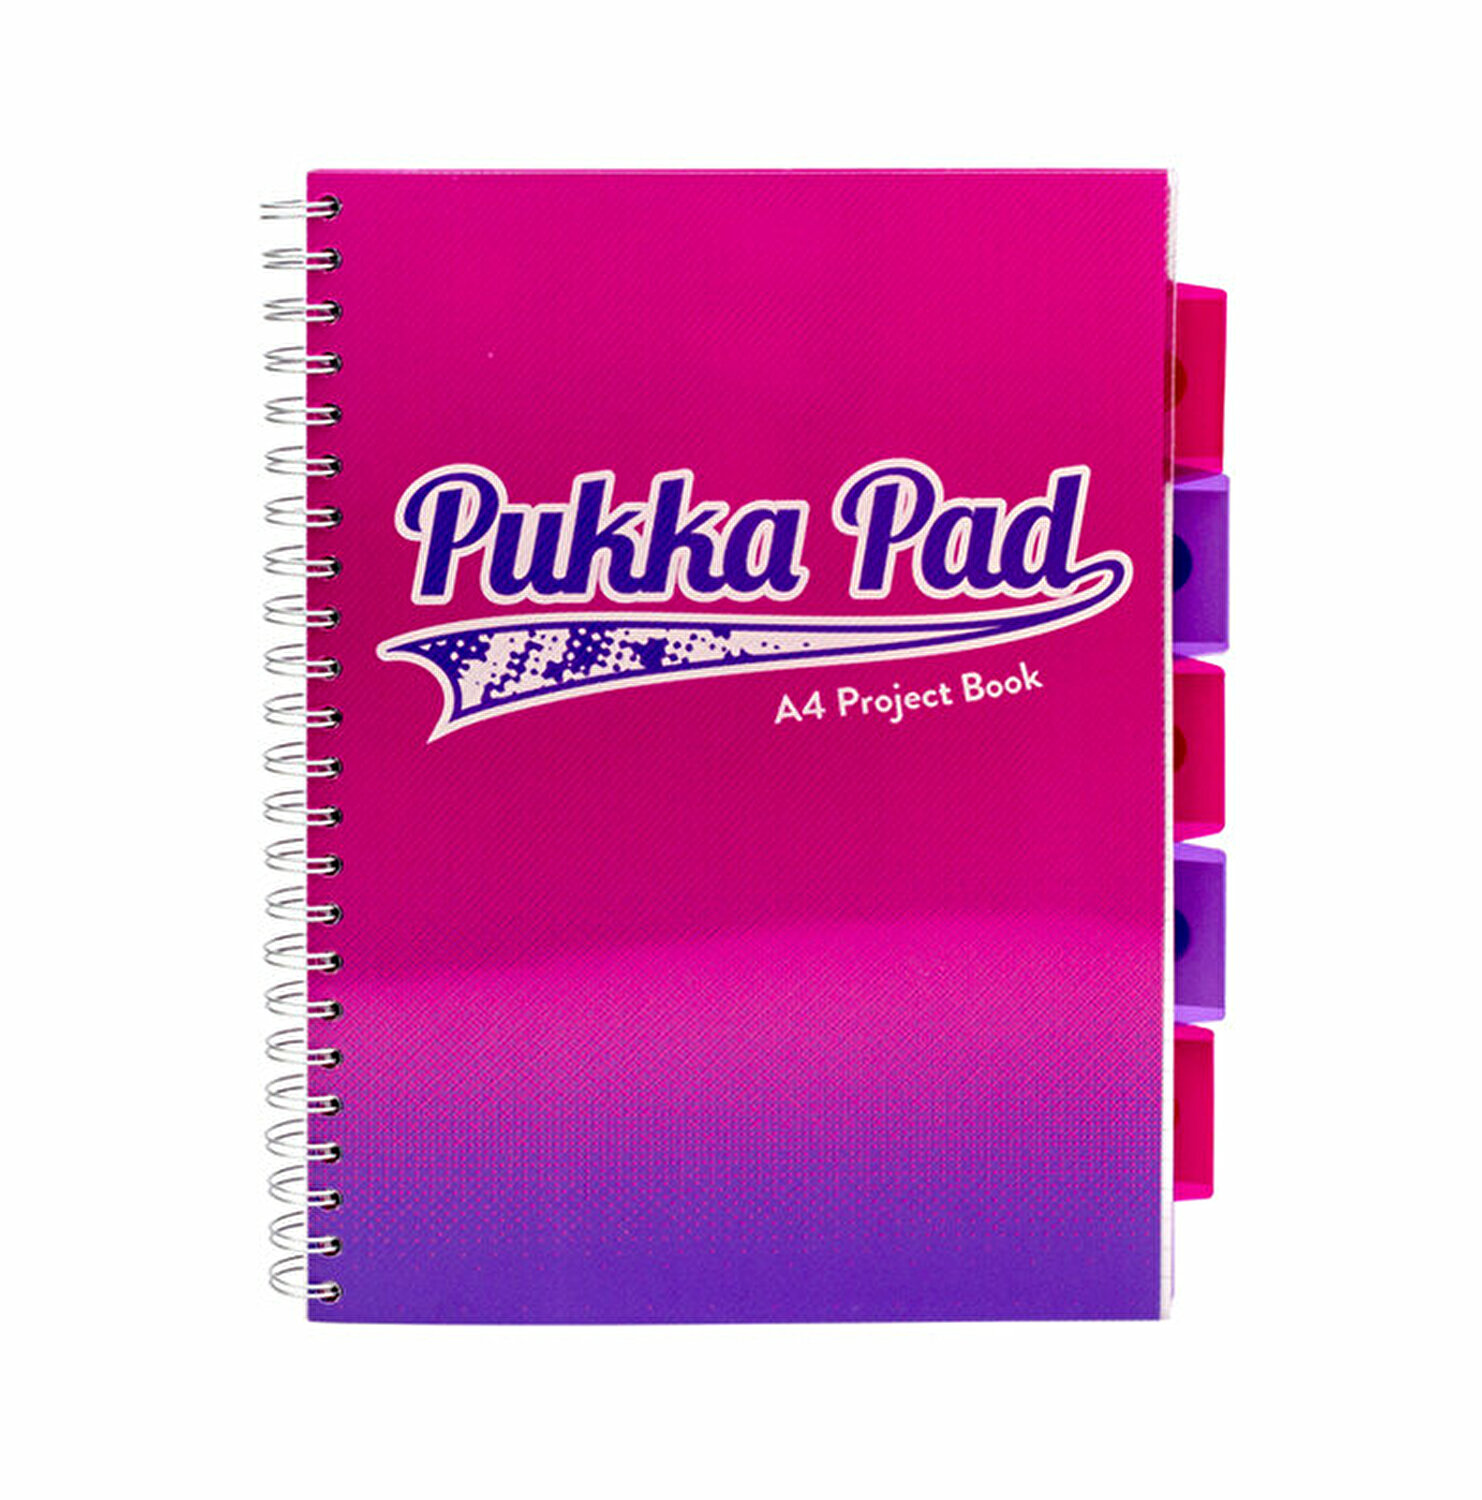 Caiet A4 matematica cu spirala si separatoare roz - Pukka Pad Project Book Fusion | Pukka Pad